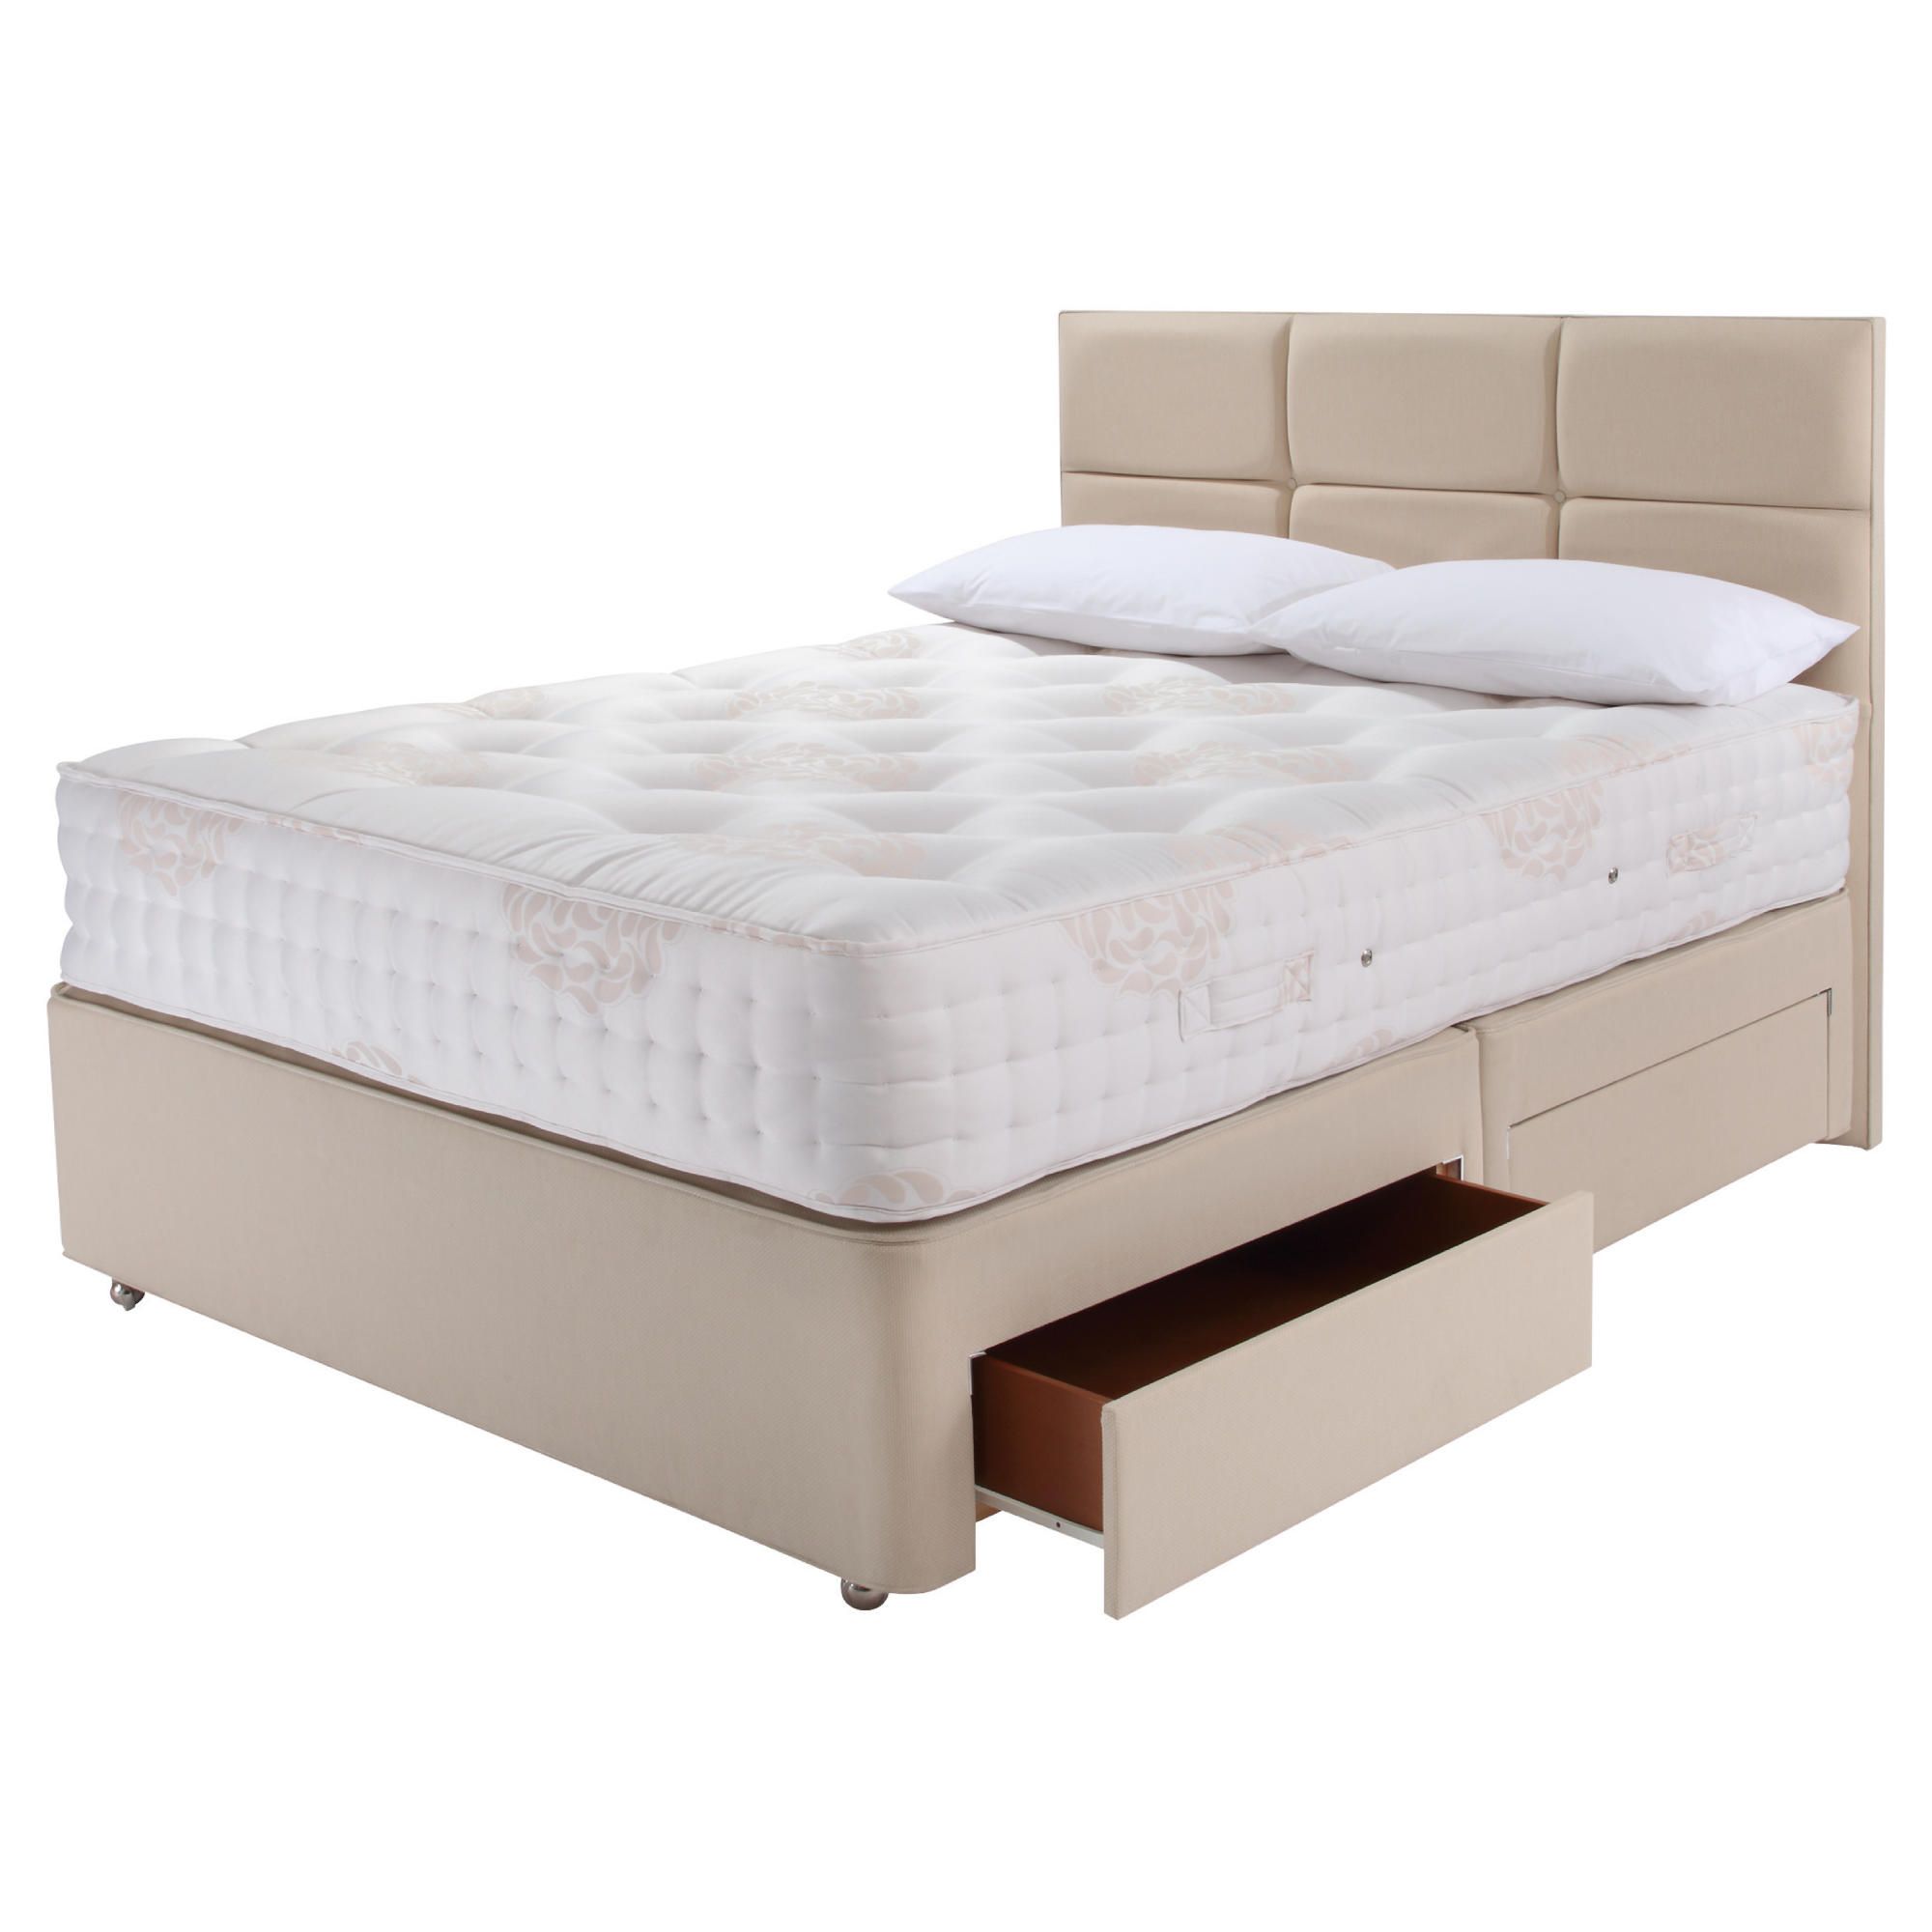 Relyon Luxury 1500 4 Drawer Divan Bed Superking at Tesco Direct